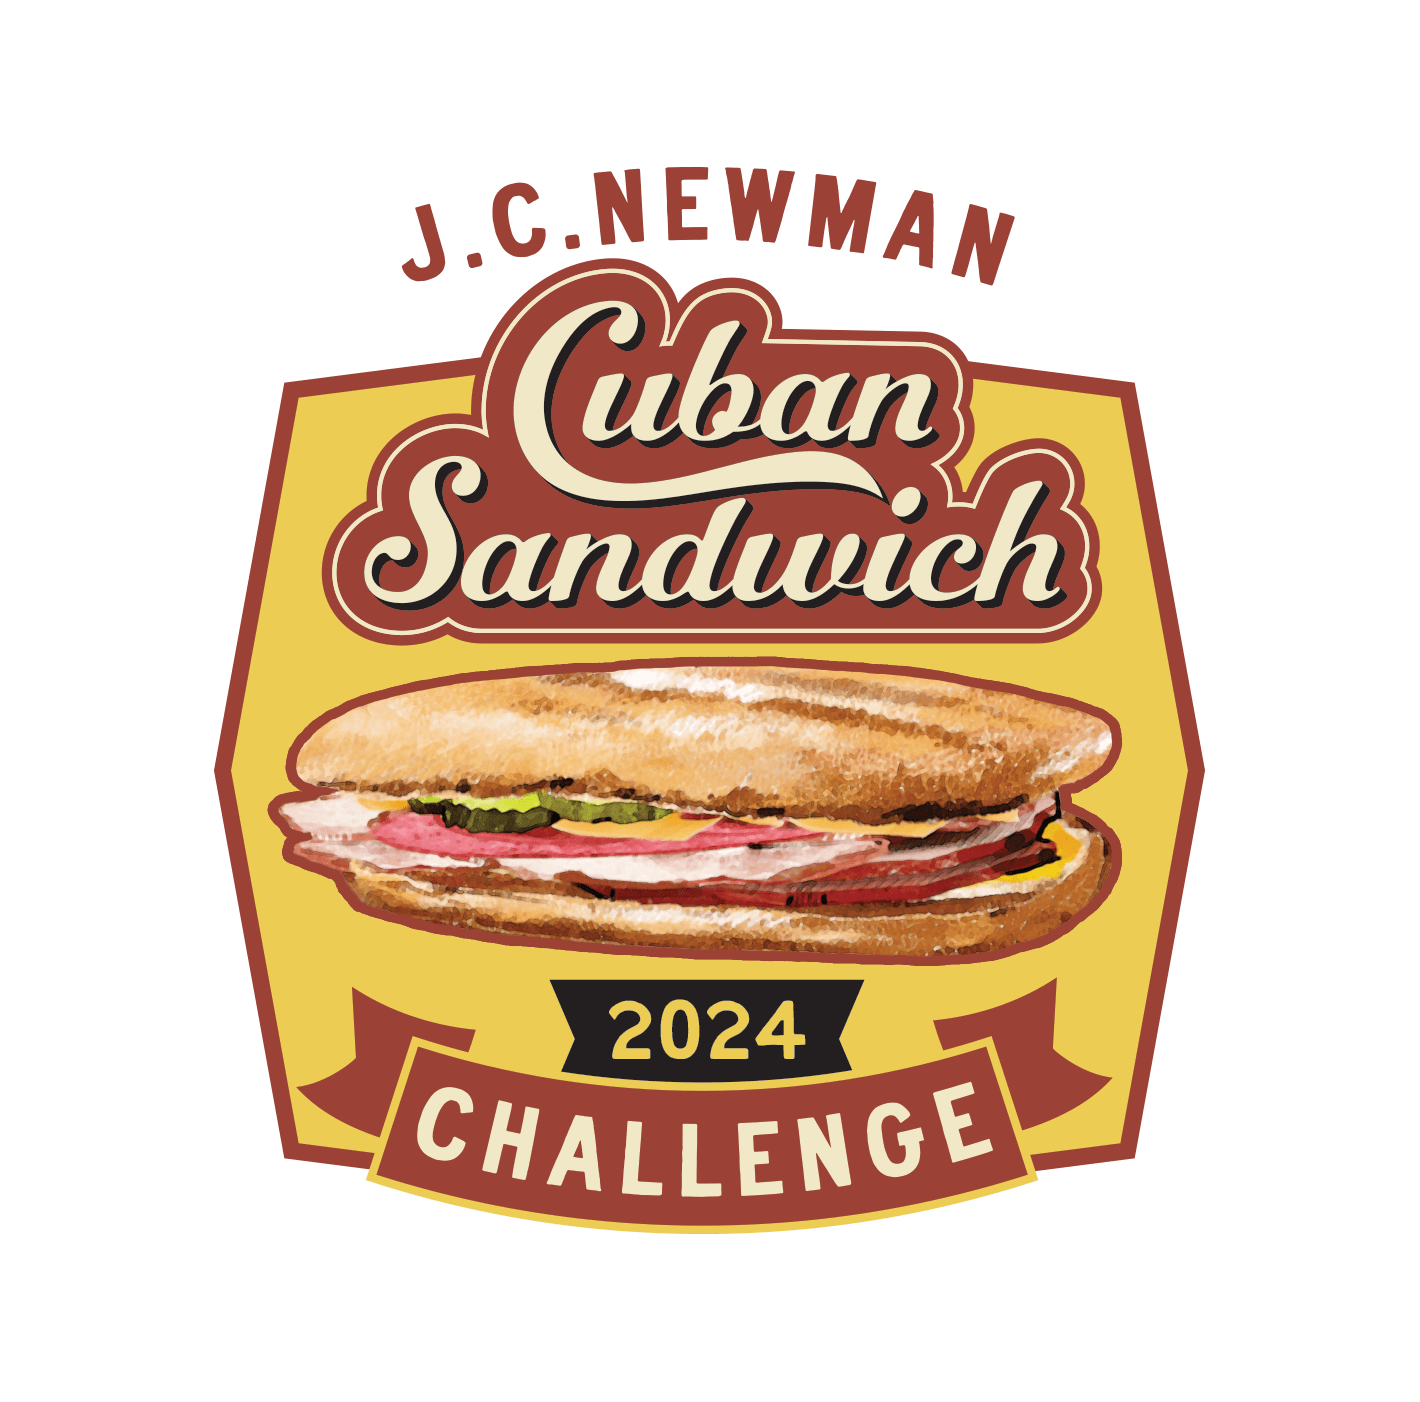 J.C. Newman Cuban Sandwich Challenge 2024 Full Logo